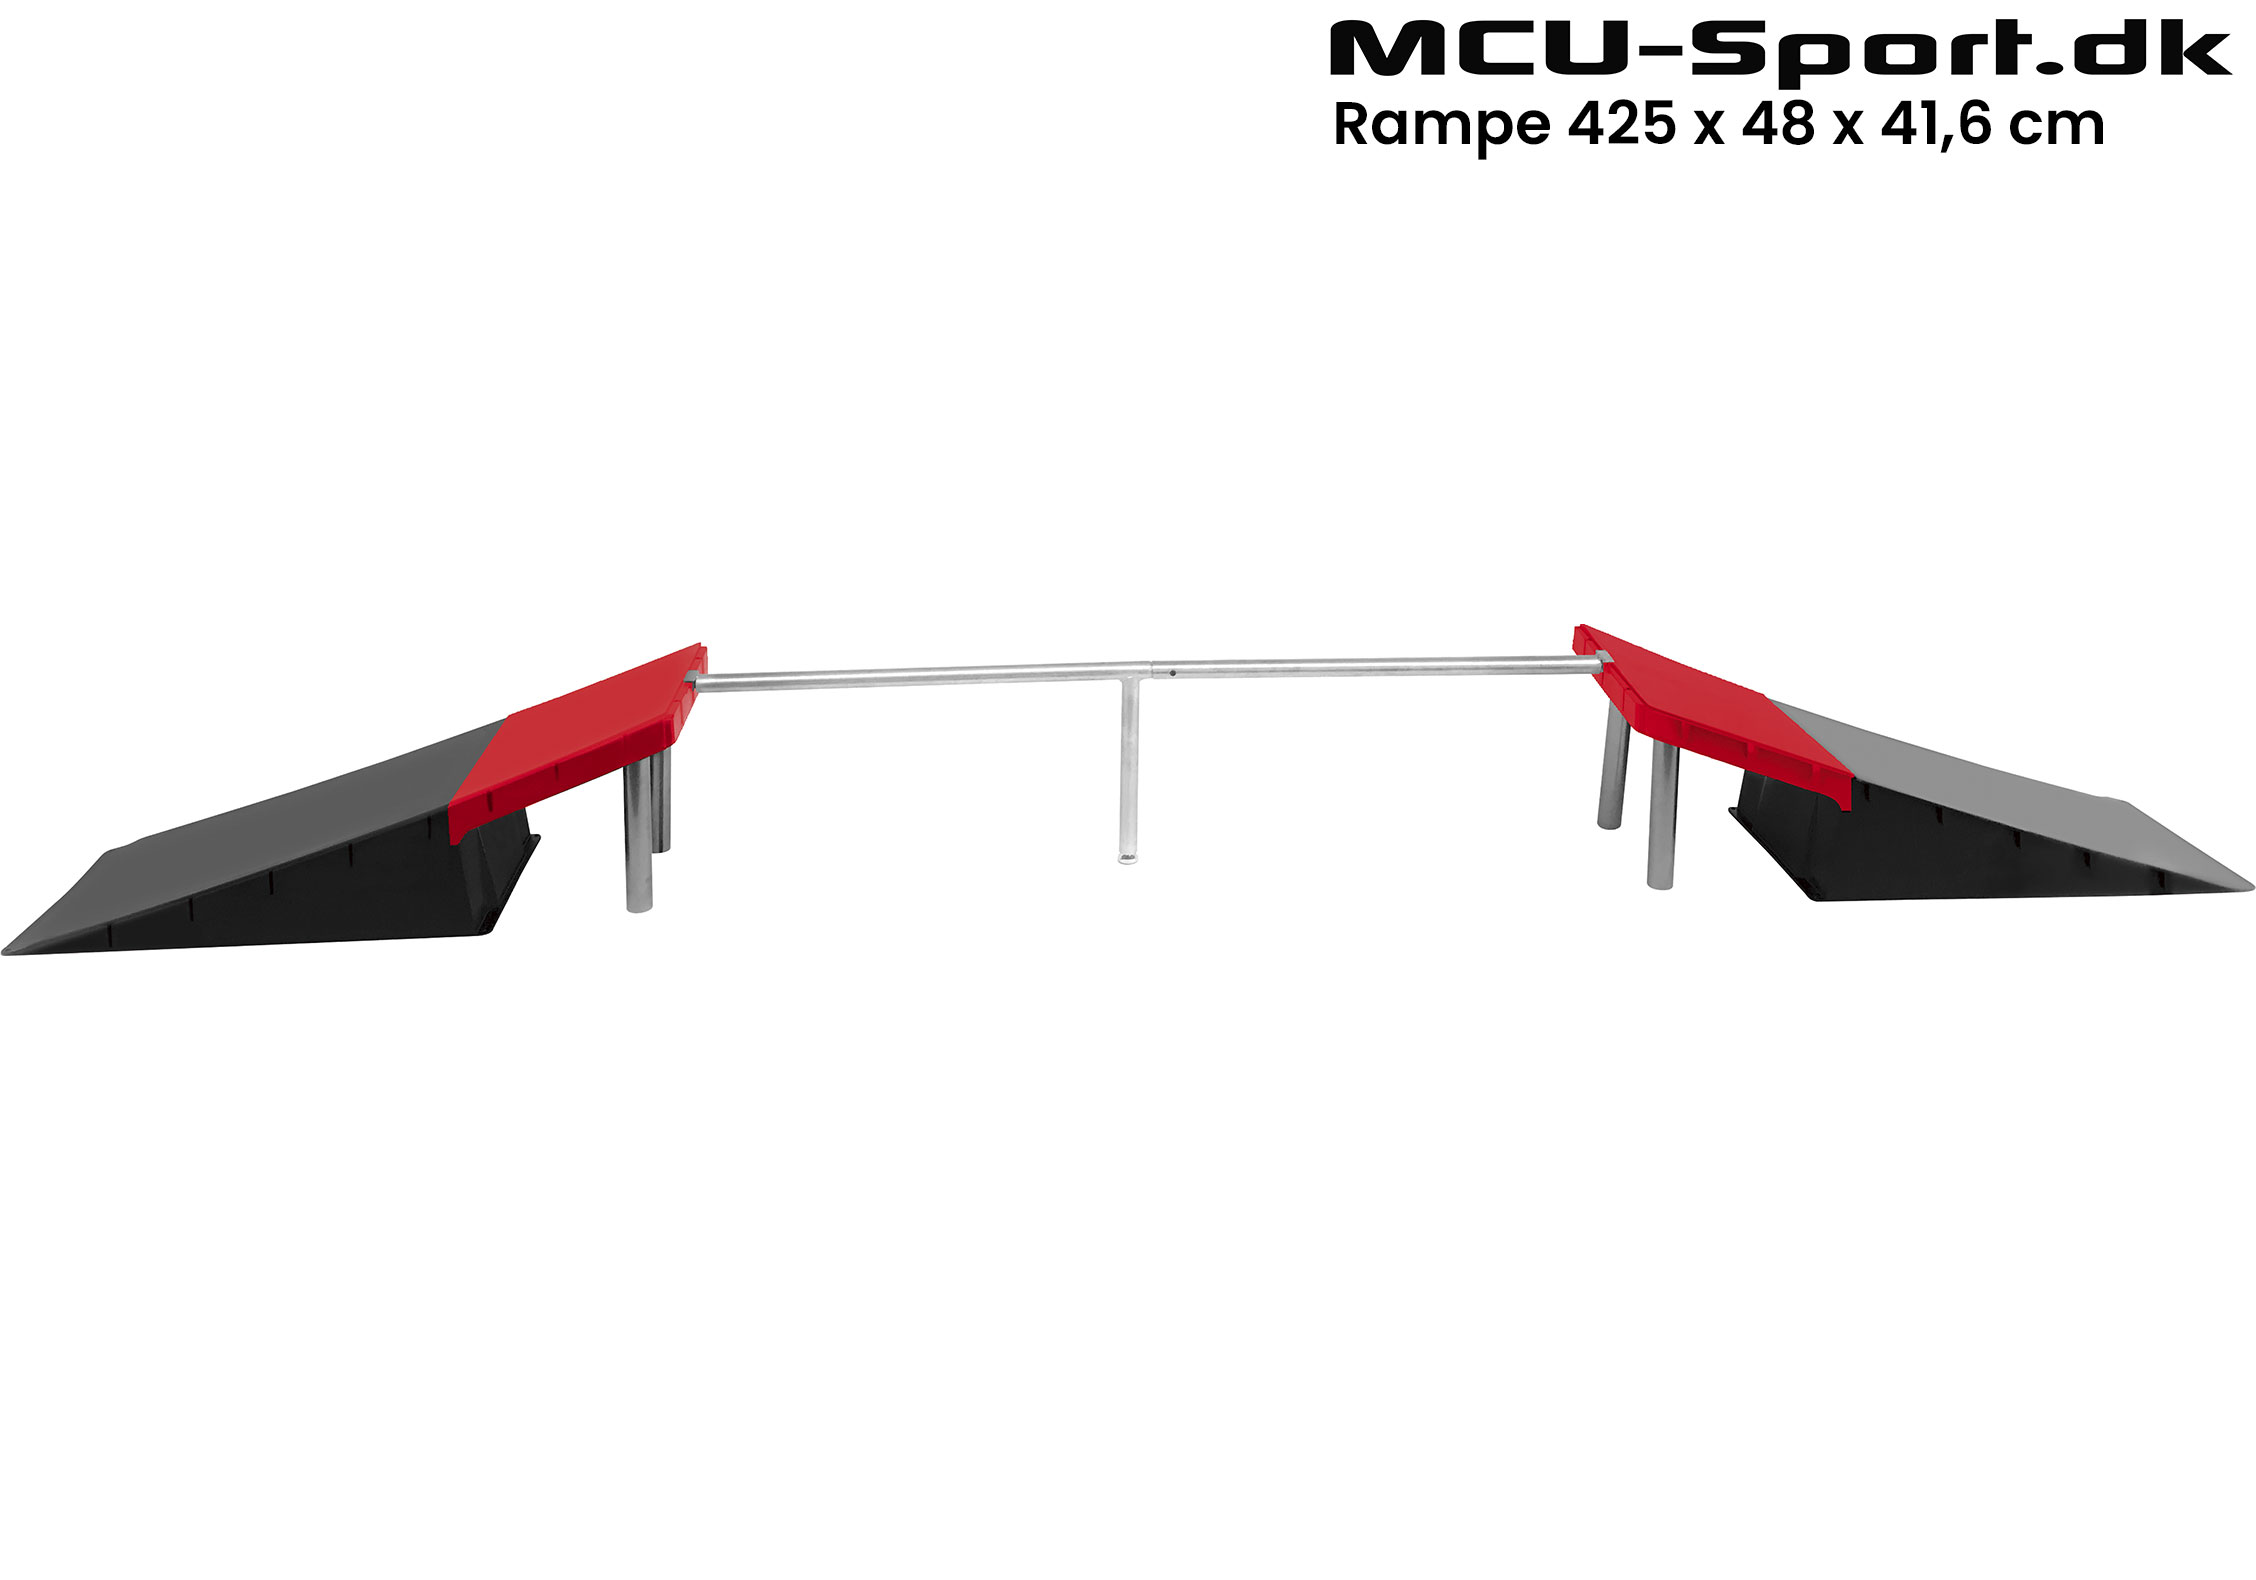 Billede af MCU-Sport Skate Rampe + Grind Rail sæt 425 x 48 x 41,6 cm